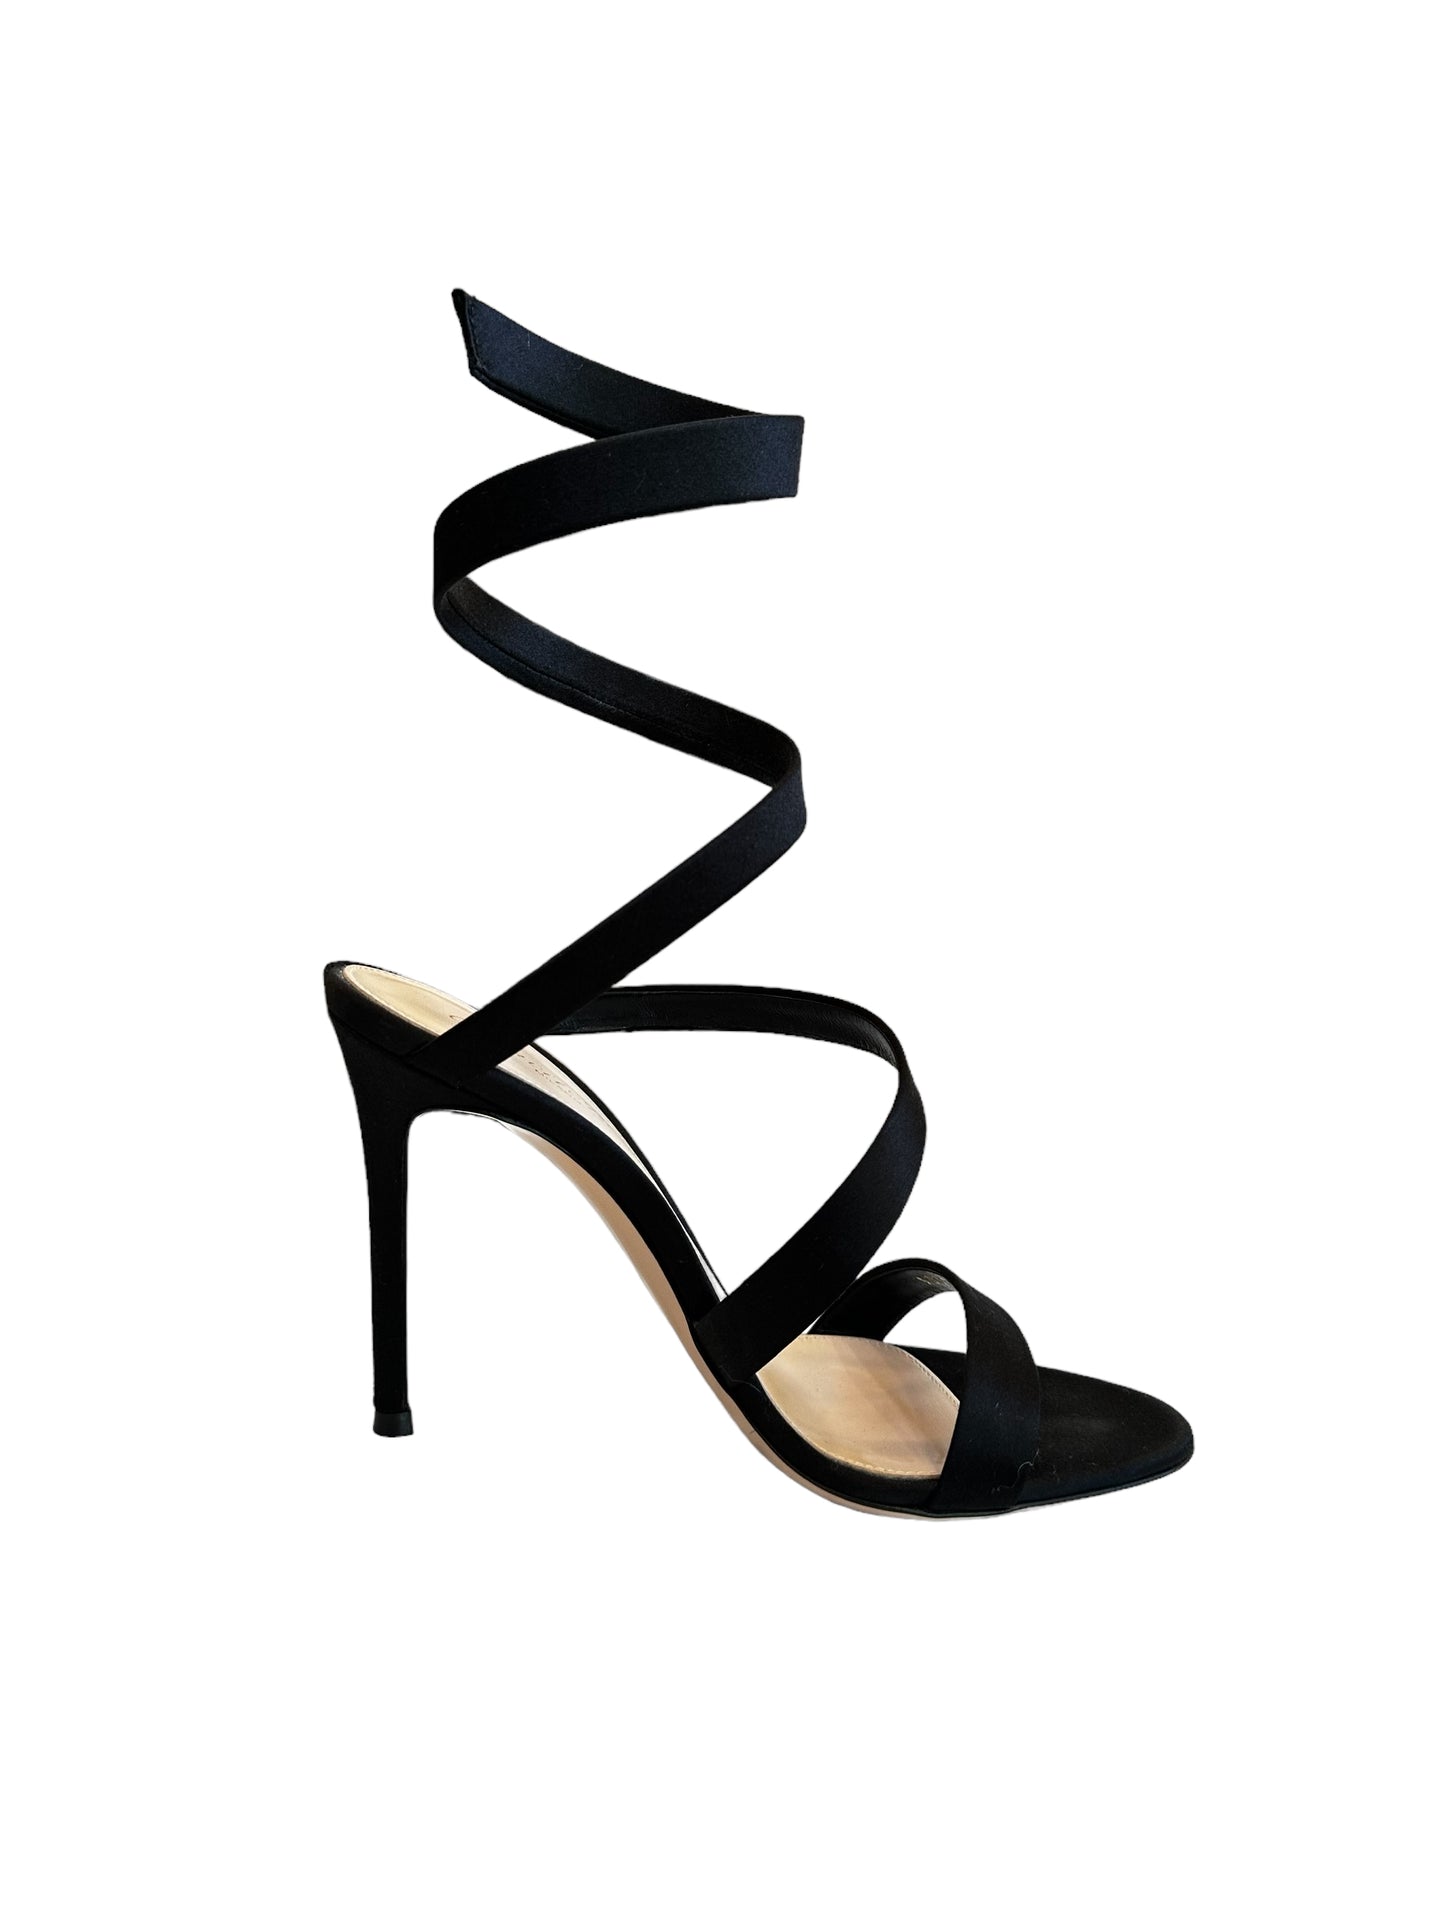 Black High Heels Sandals - 6.5